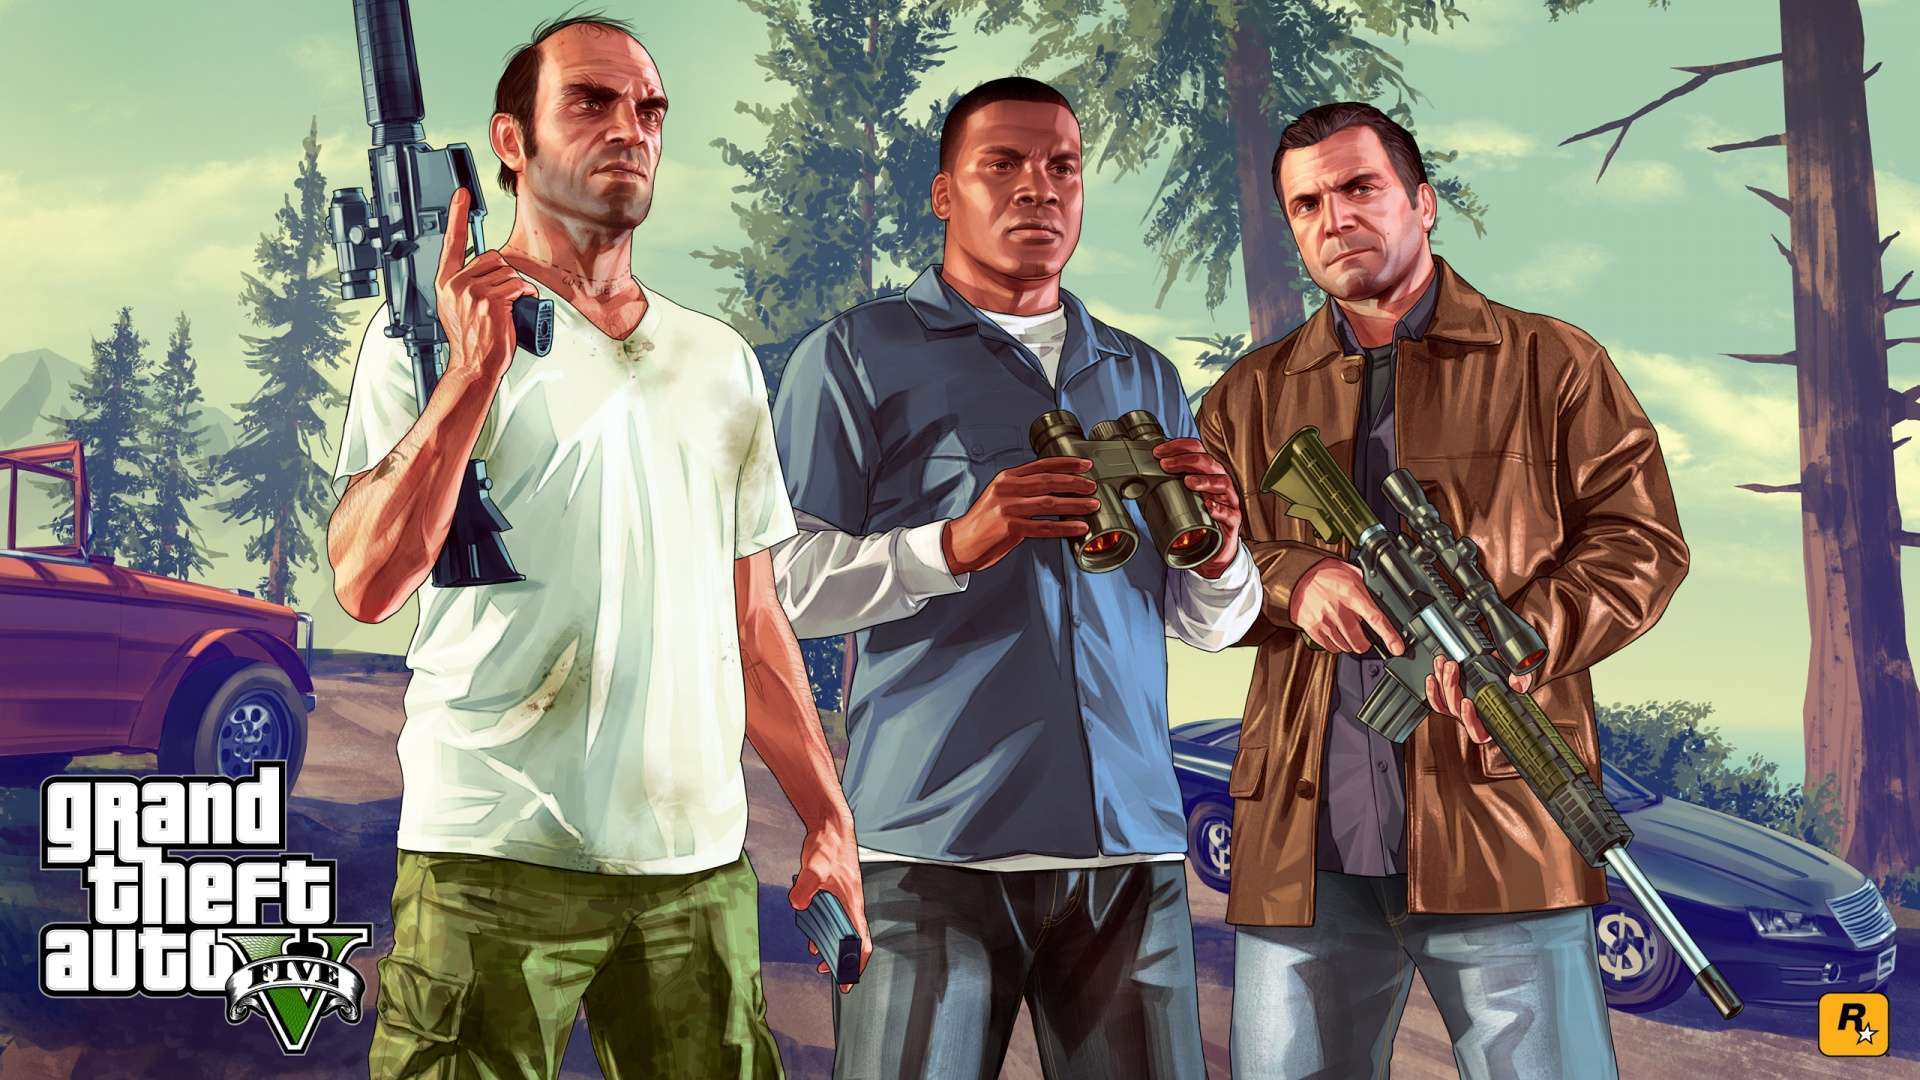 Wallpaper Grand Theft Auto Gta HD 1080p Upload At March